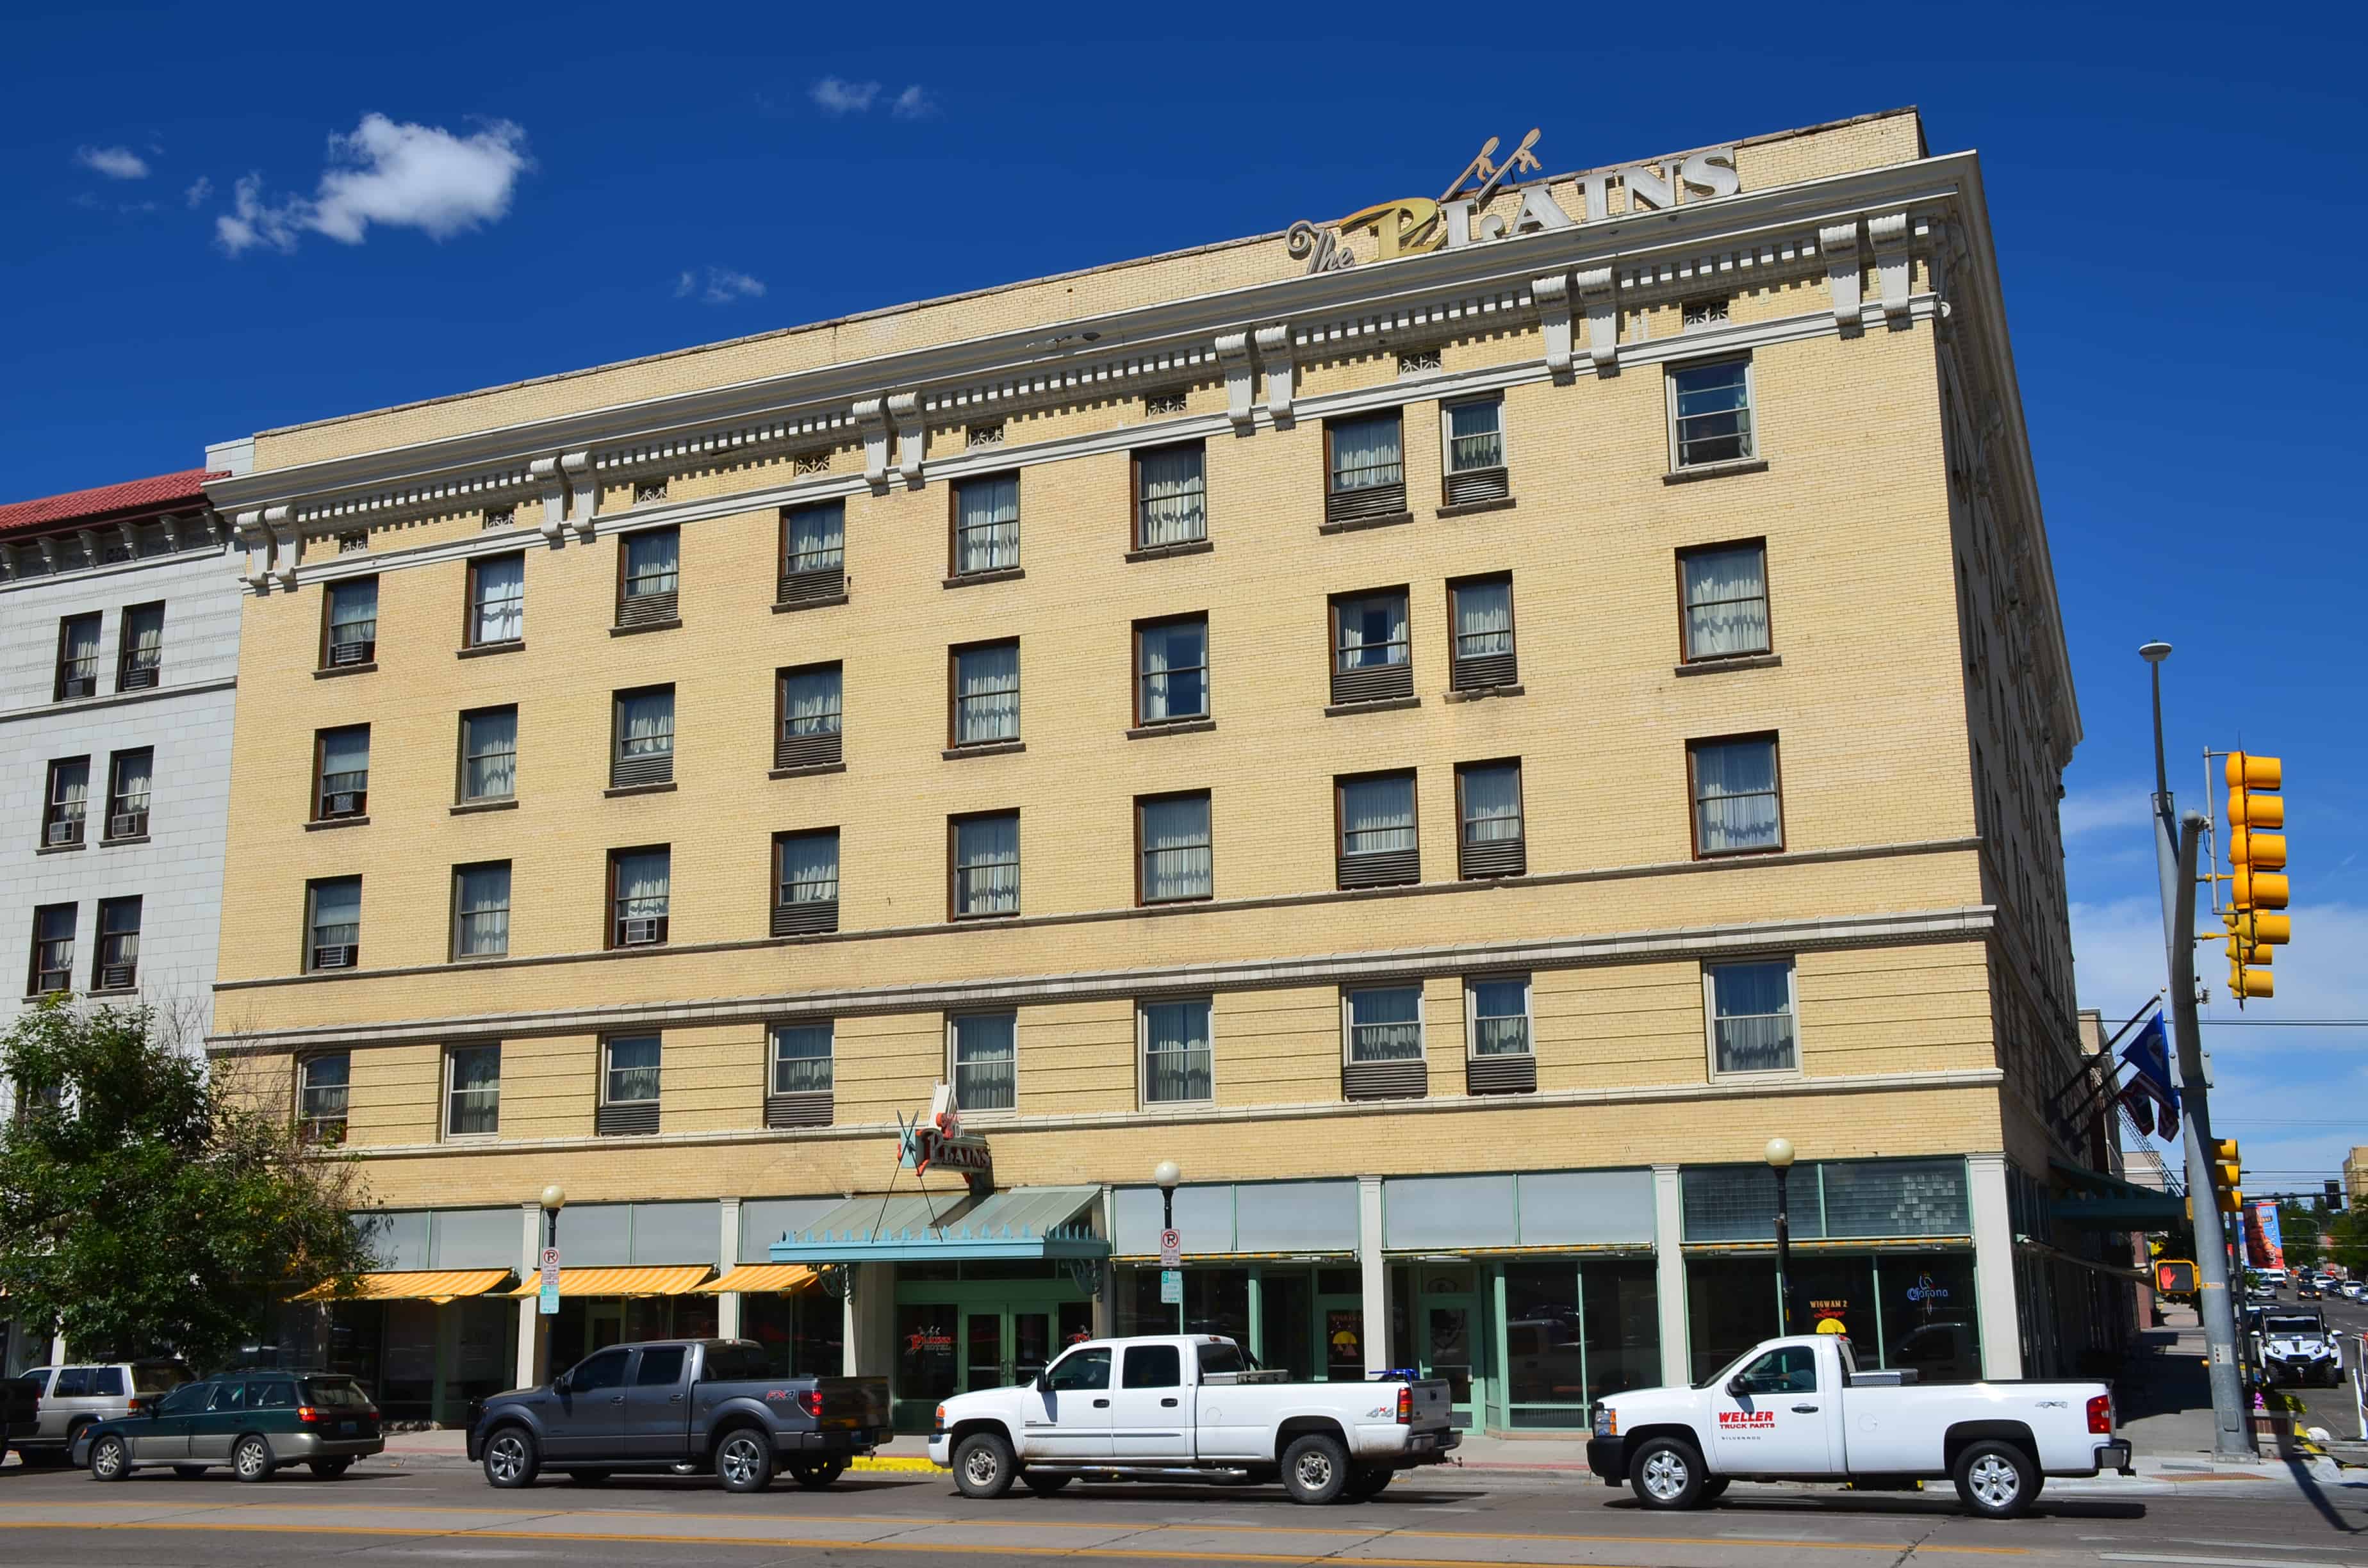 Plains Hotel in Cheyenne, Wyoming